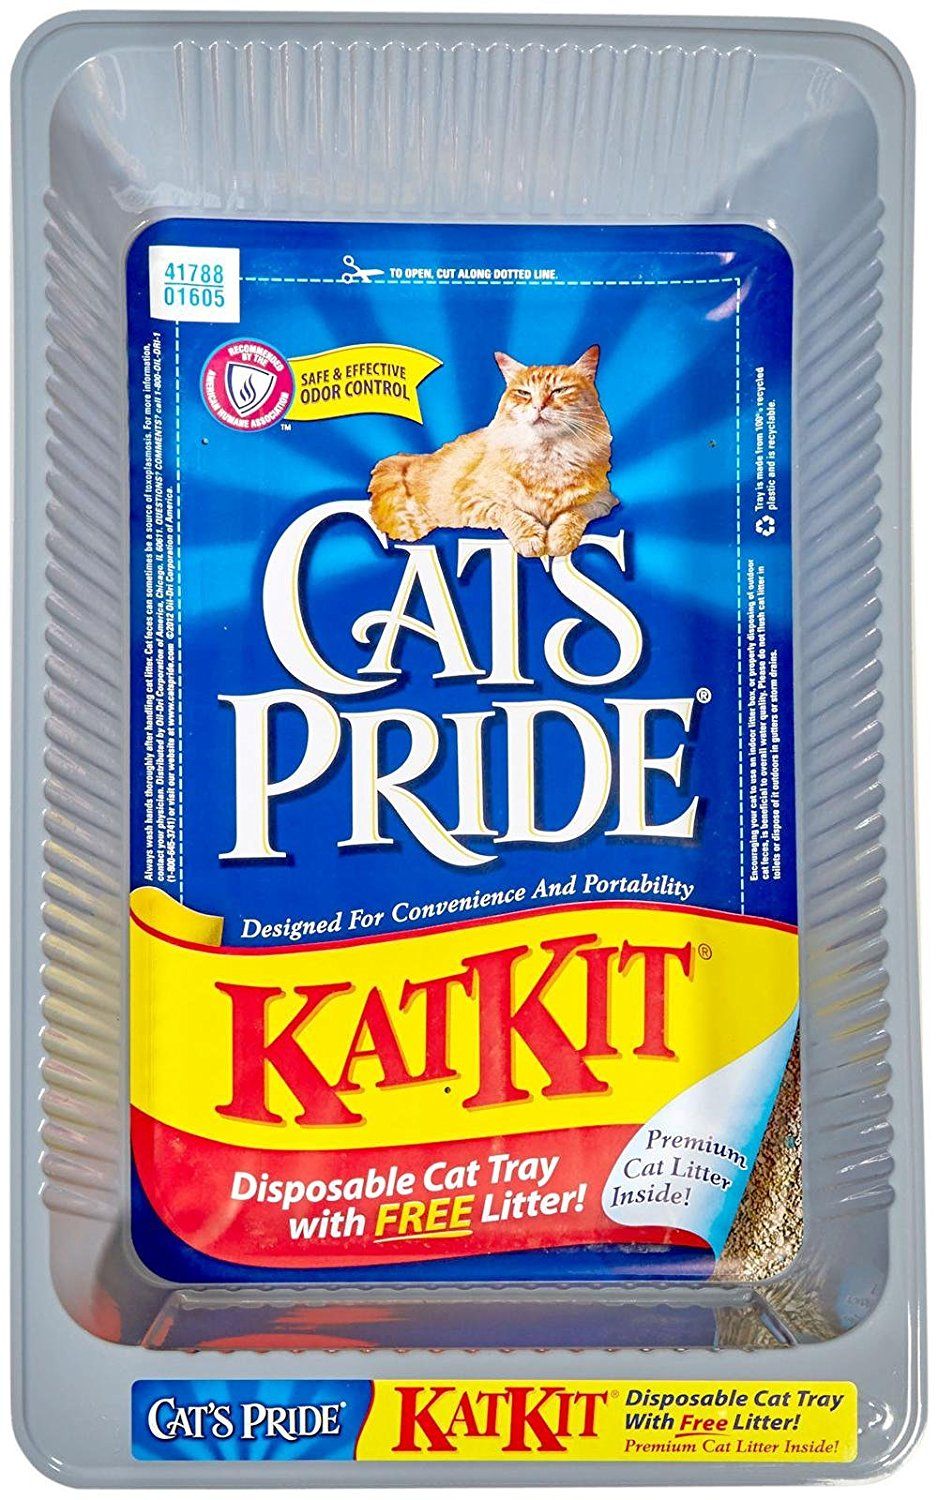 Pet Pride Cat Food Review Petspare